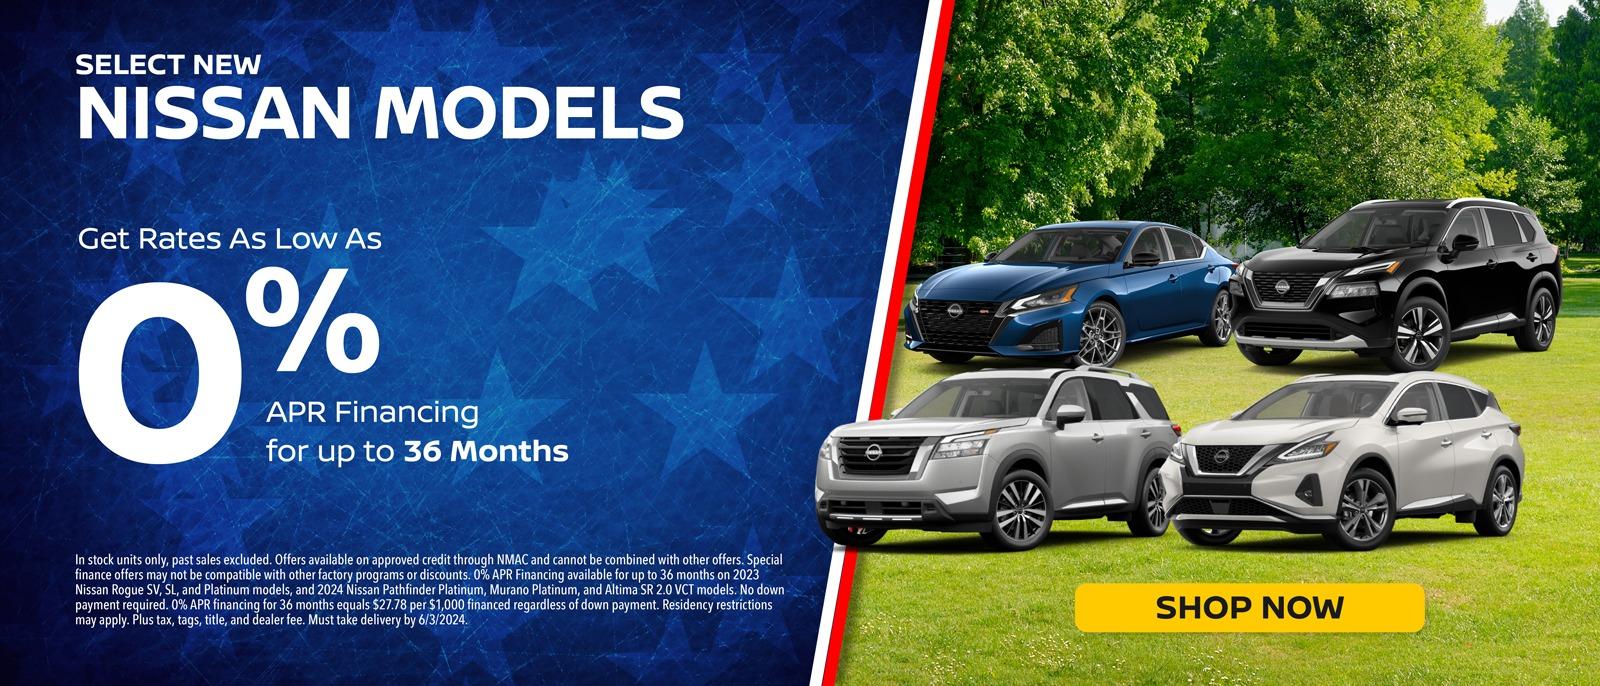 Select New Nissan Models